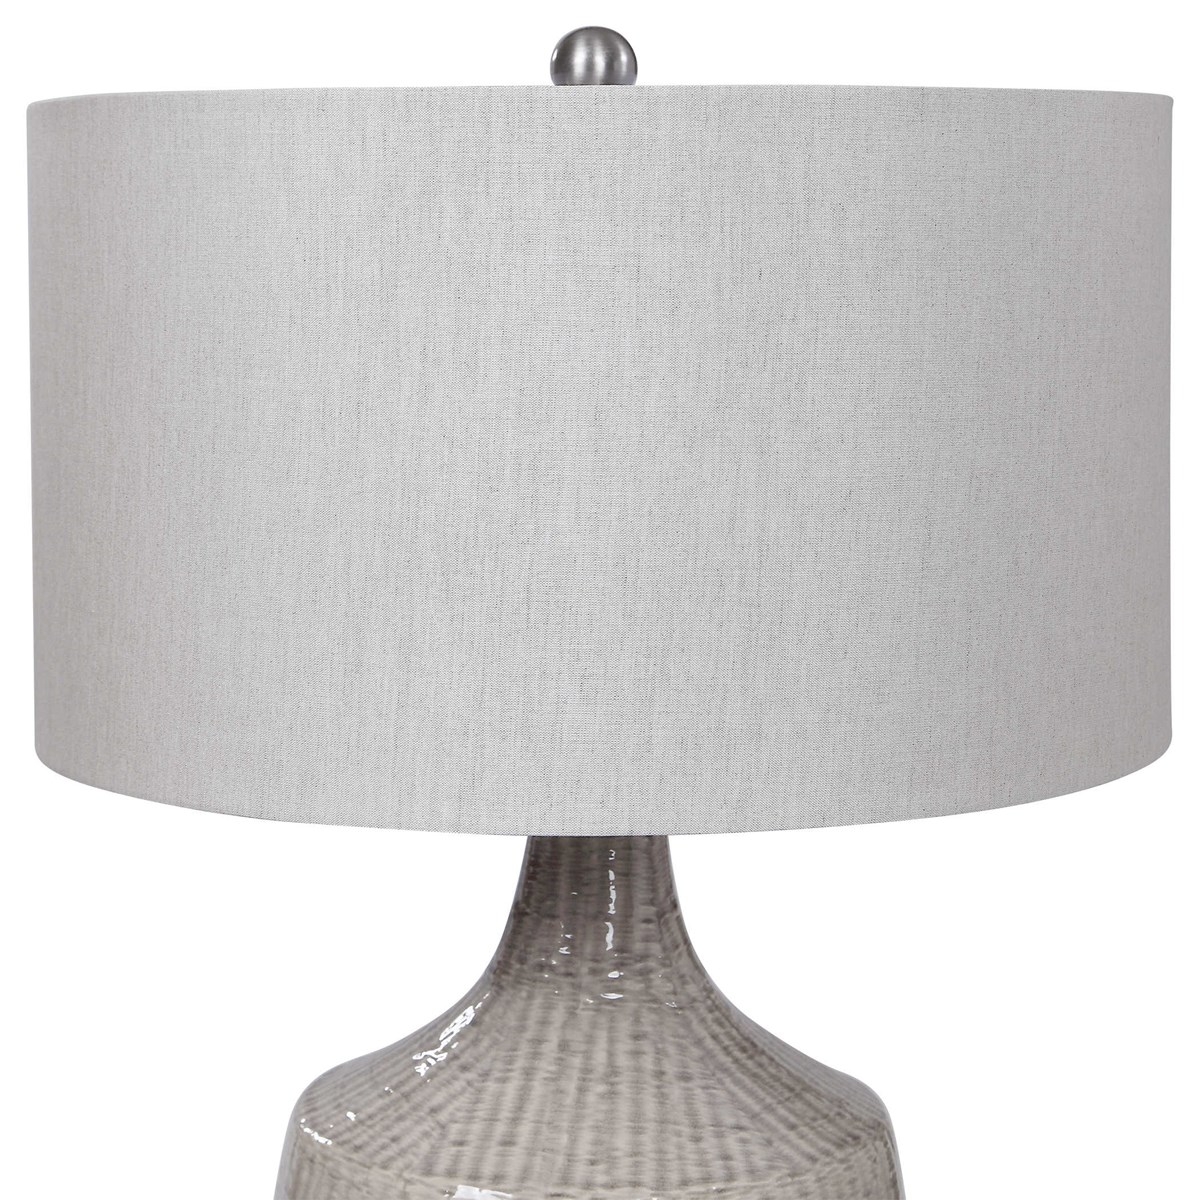 Felipe Gray Table Lamp, 30" - Image 3